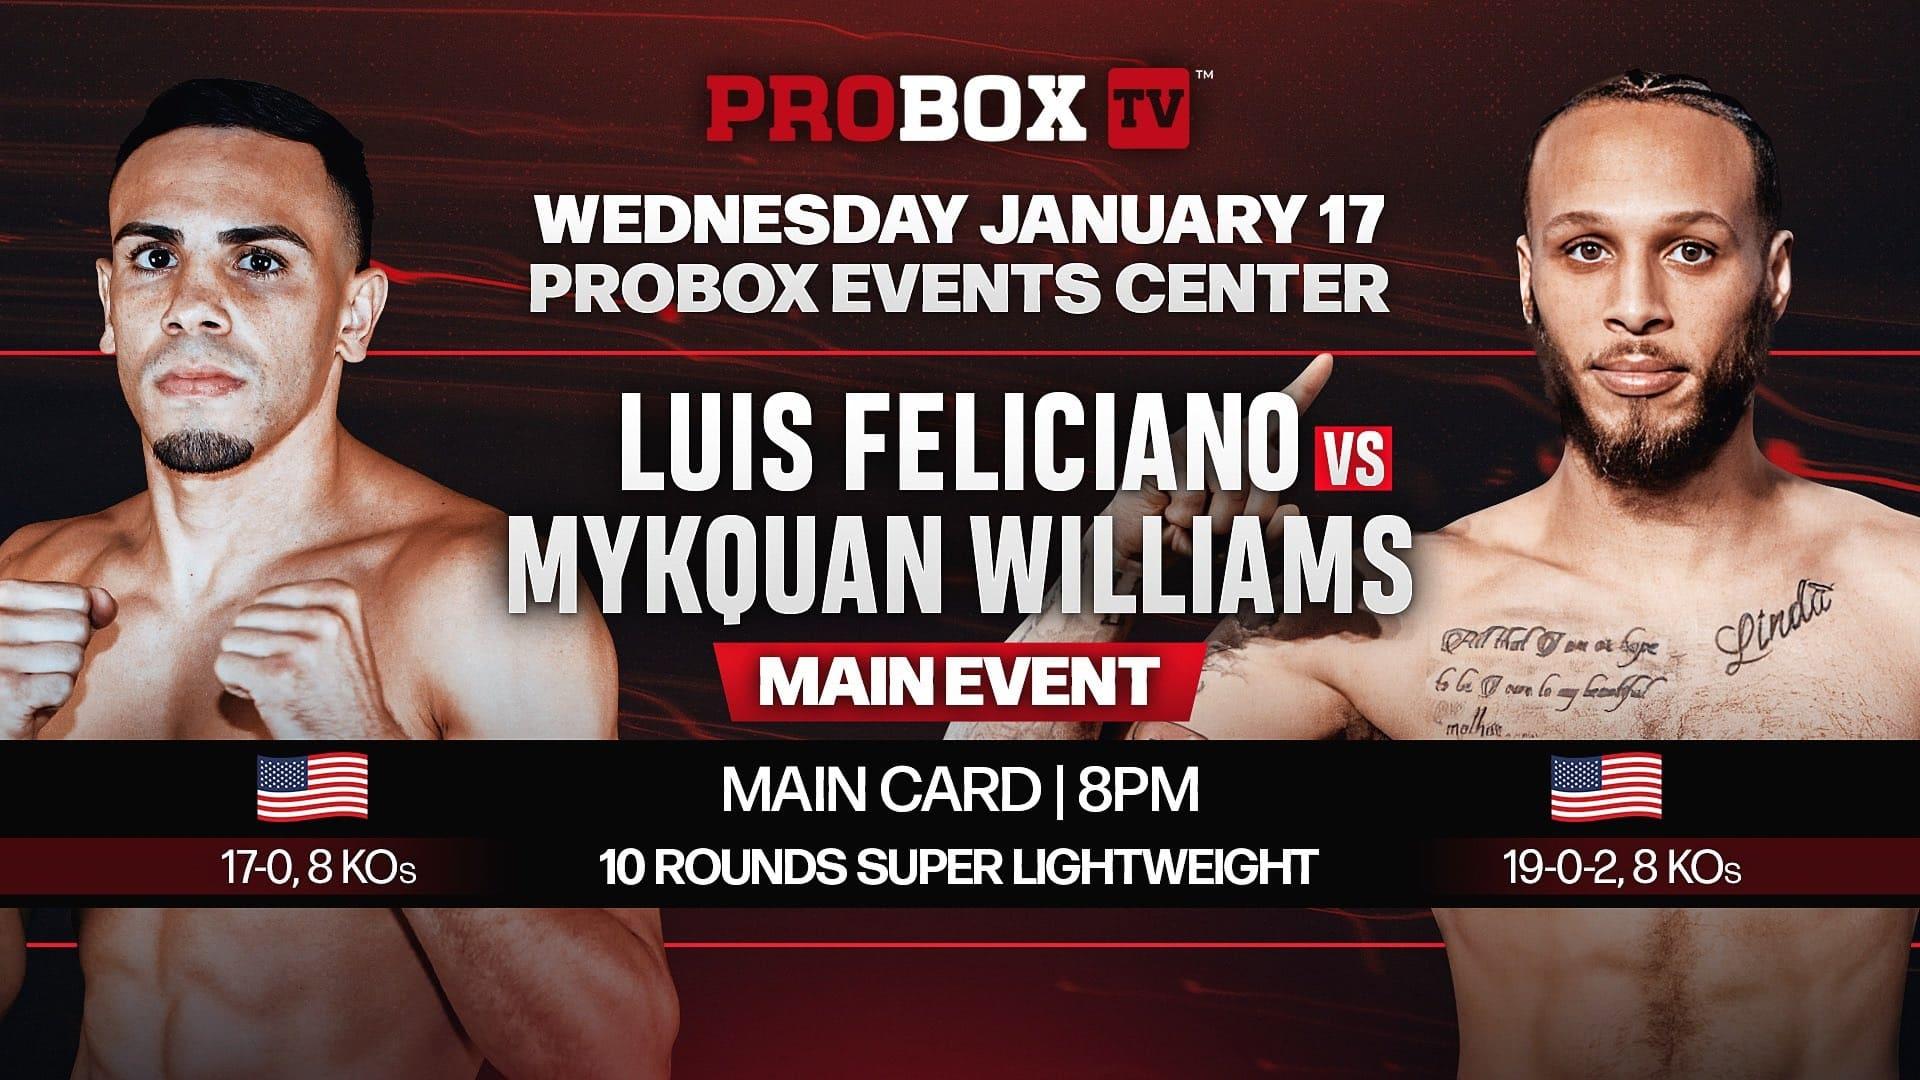 Luis Feliciano vs. Mykquan Williams backdrop